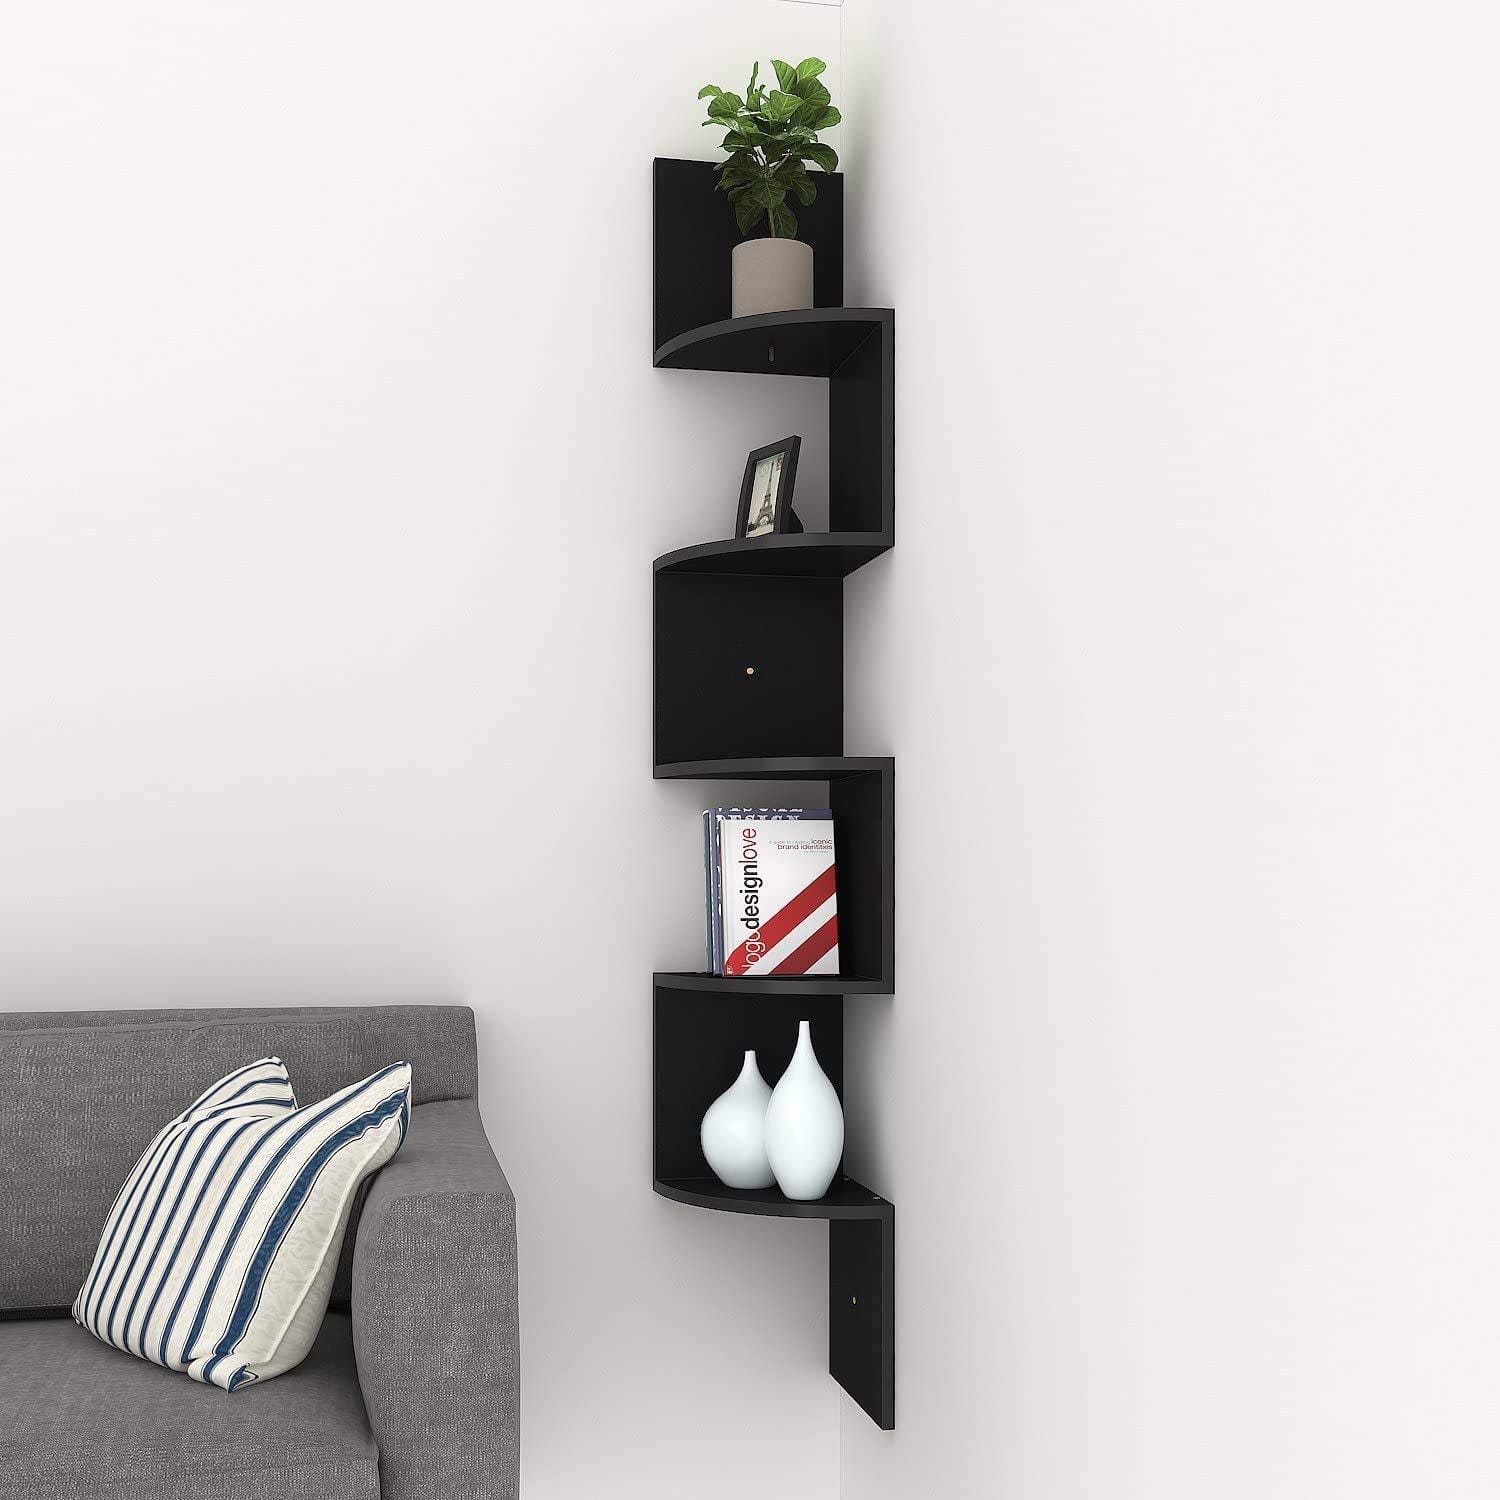 Zigzag Shape| Wall Shelf for Living Room,Bedroom